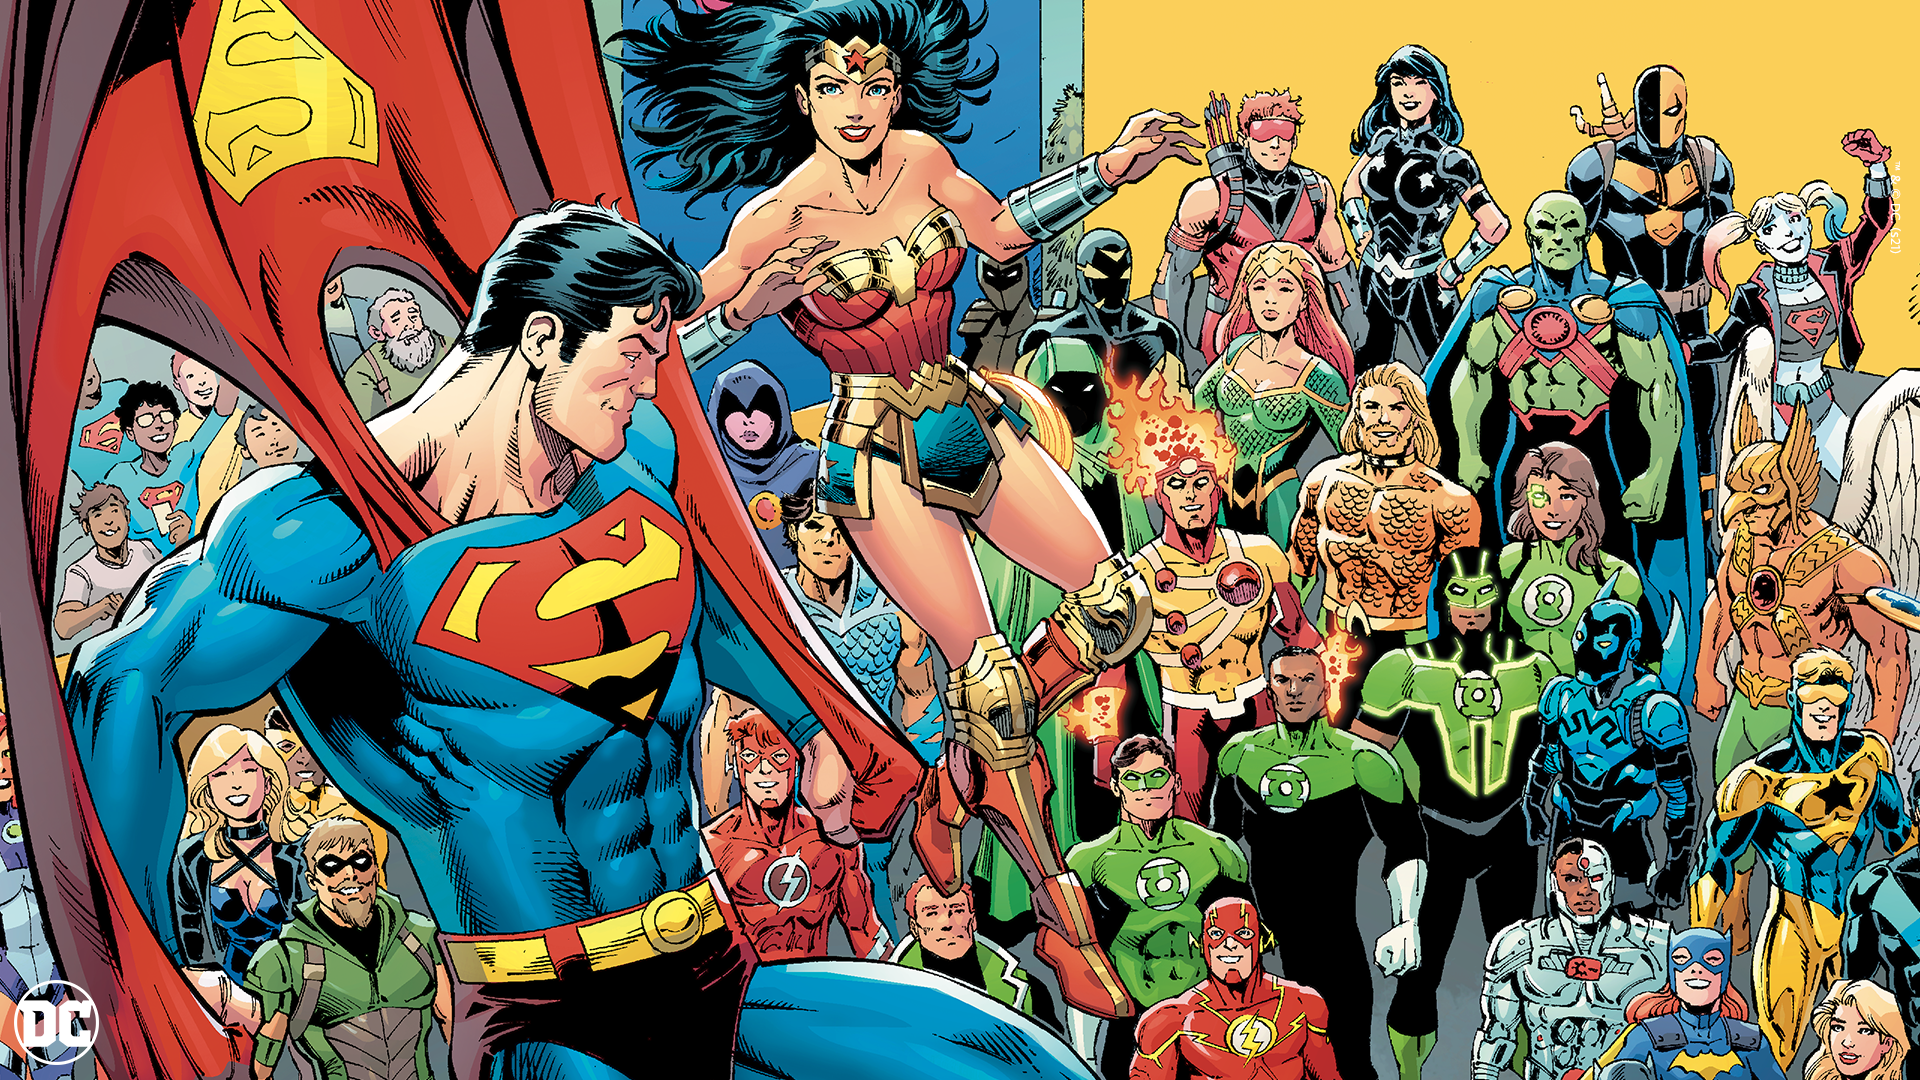 DCComics_Superman&Lois101_44_v1.png